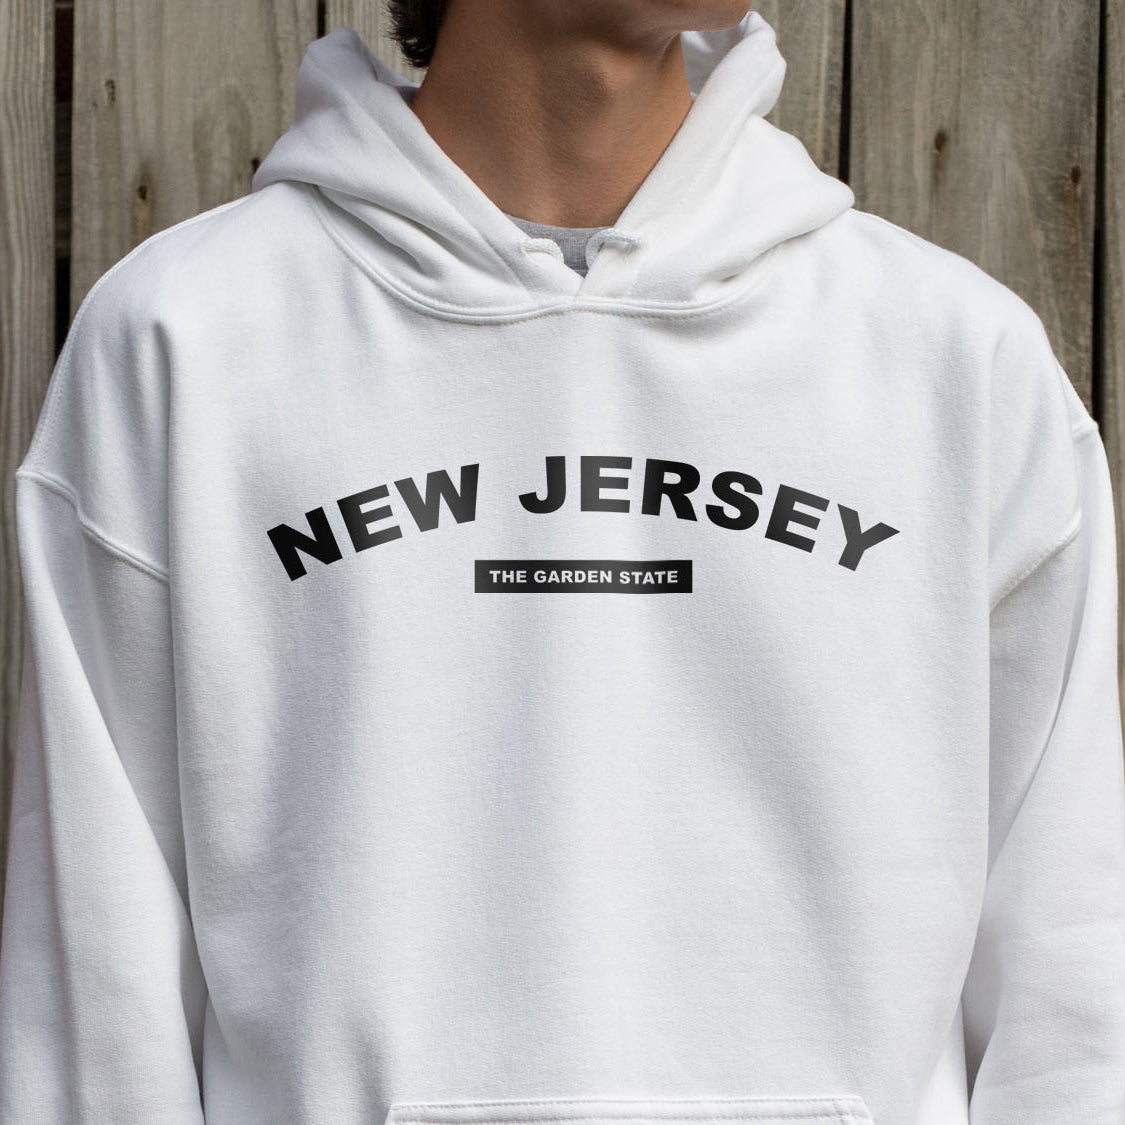 New Jersey The Garden State Hoodie - United States Name & Slogan Minimal Design Printed Hoodie